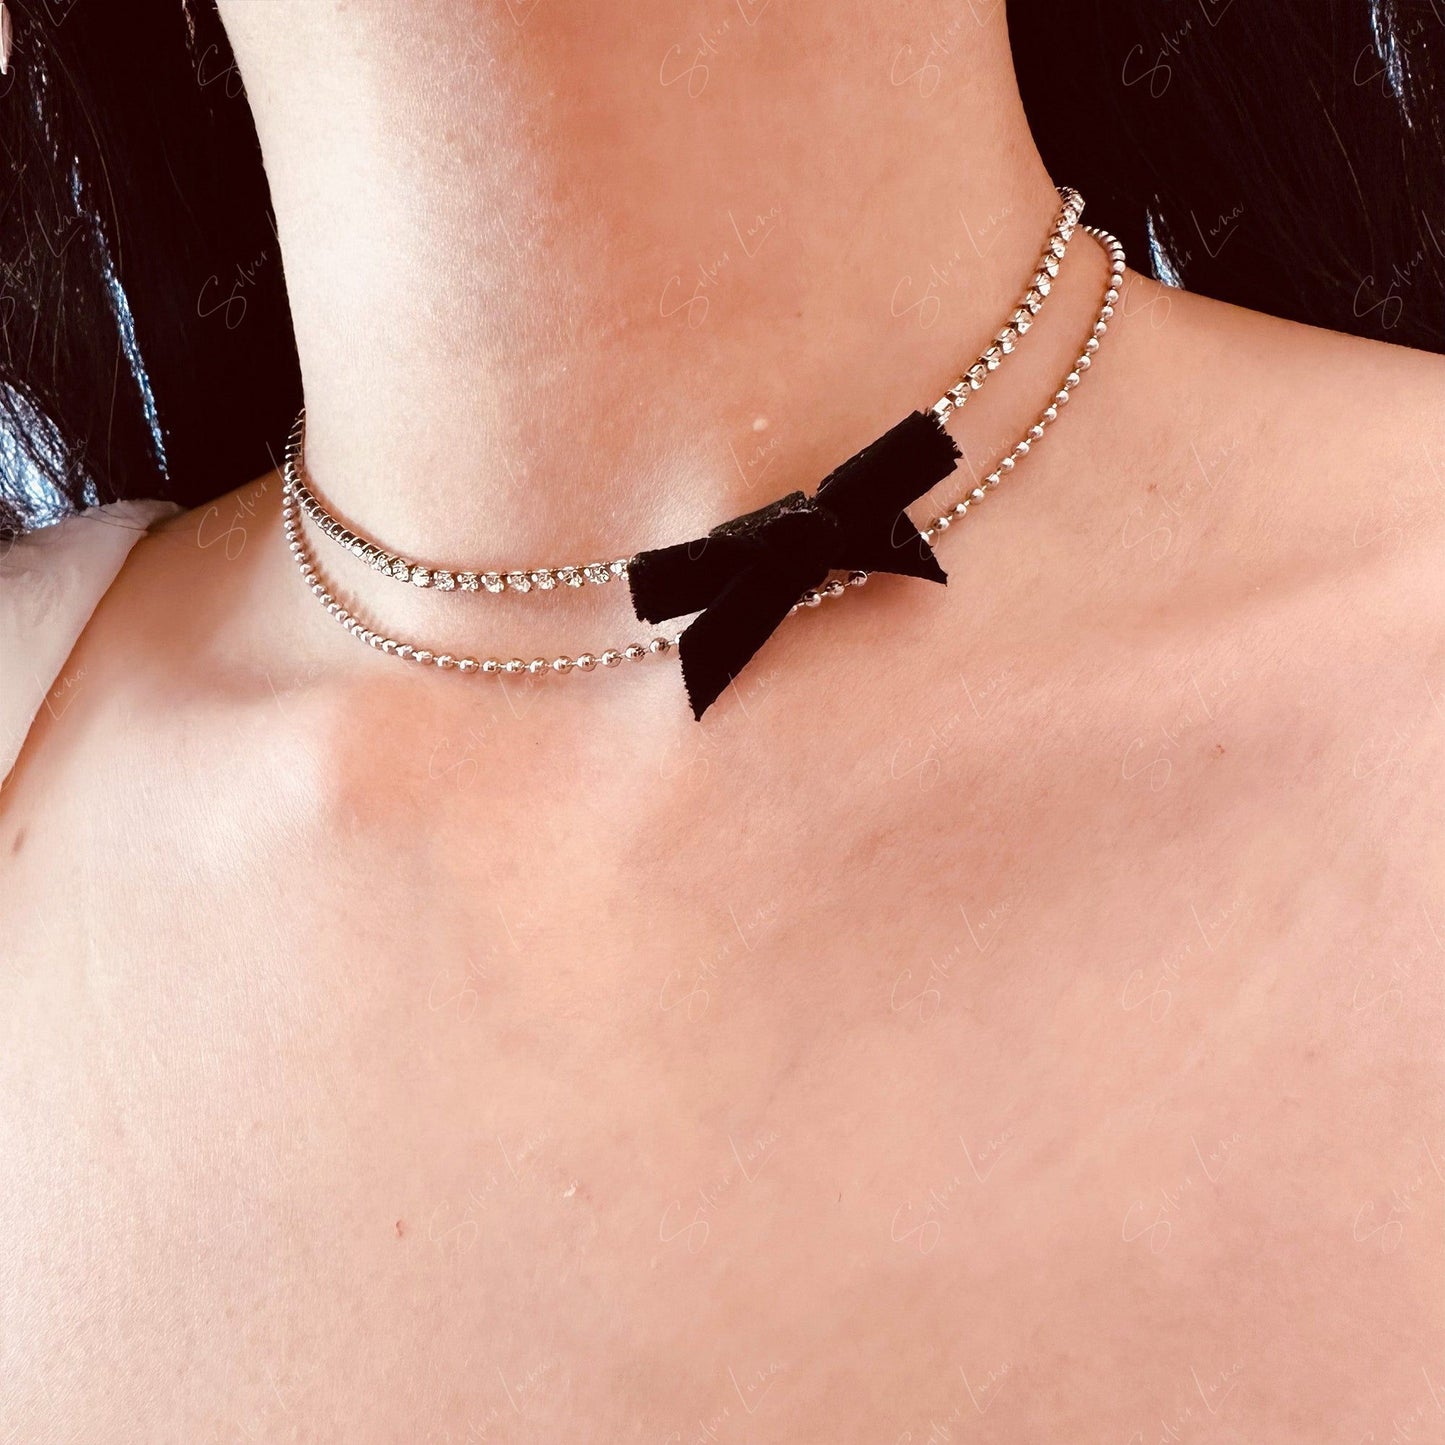 Crystal rhinestone bowtie choker necklace